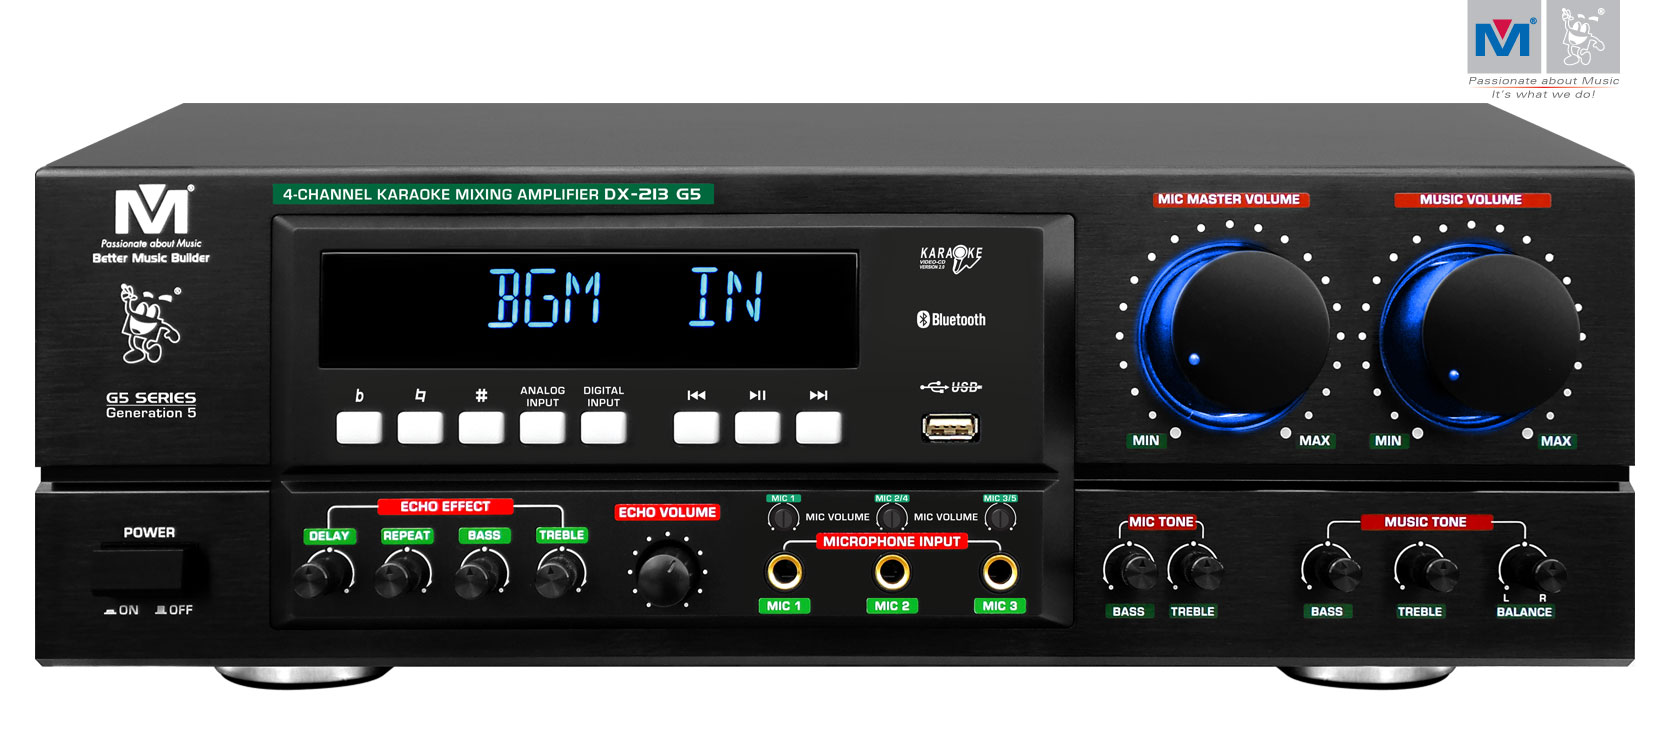 Better Music Builder (M) DX-213 G5 800W Professional Mixing Amplifier